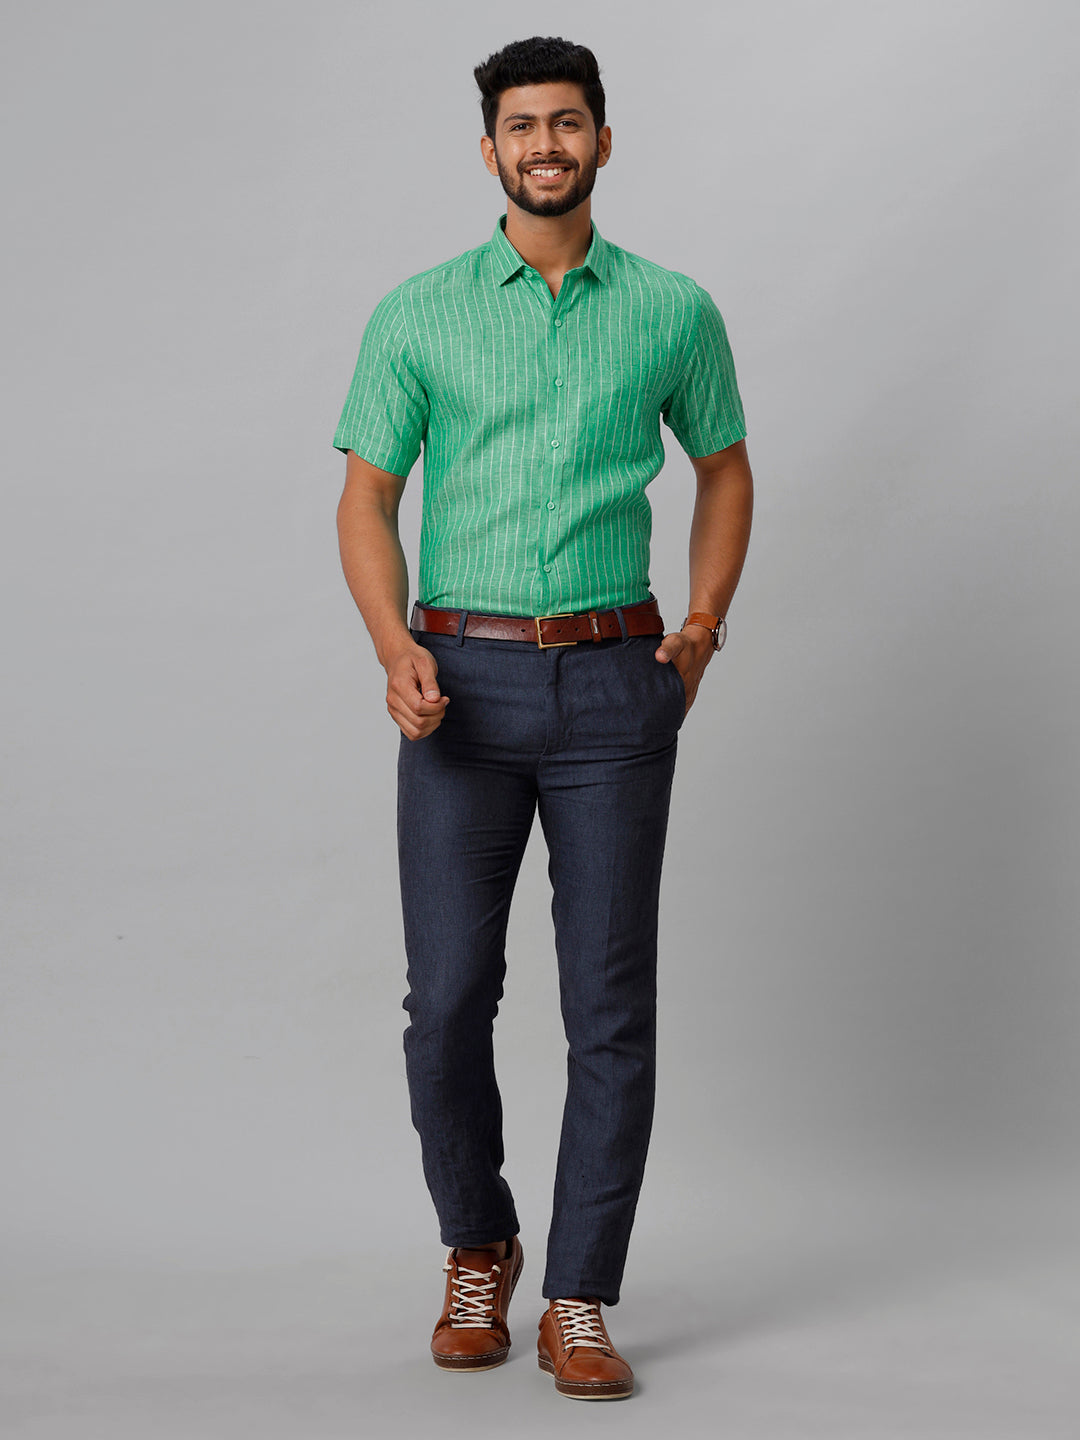 Green shirt with matching pants, Green shirts for man, green shirt - YouTube